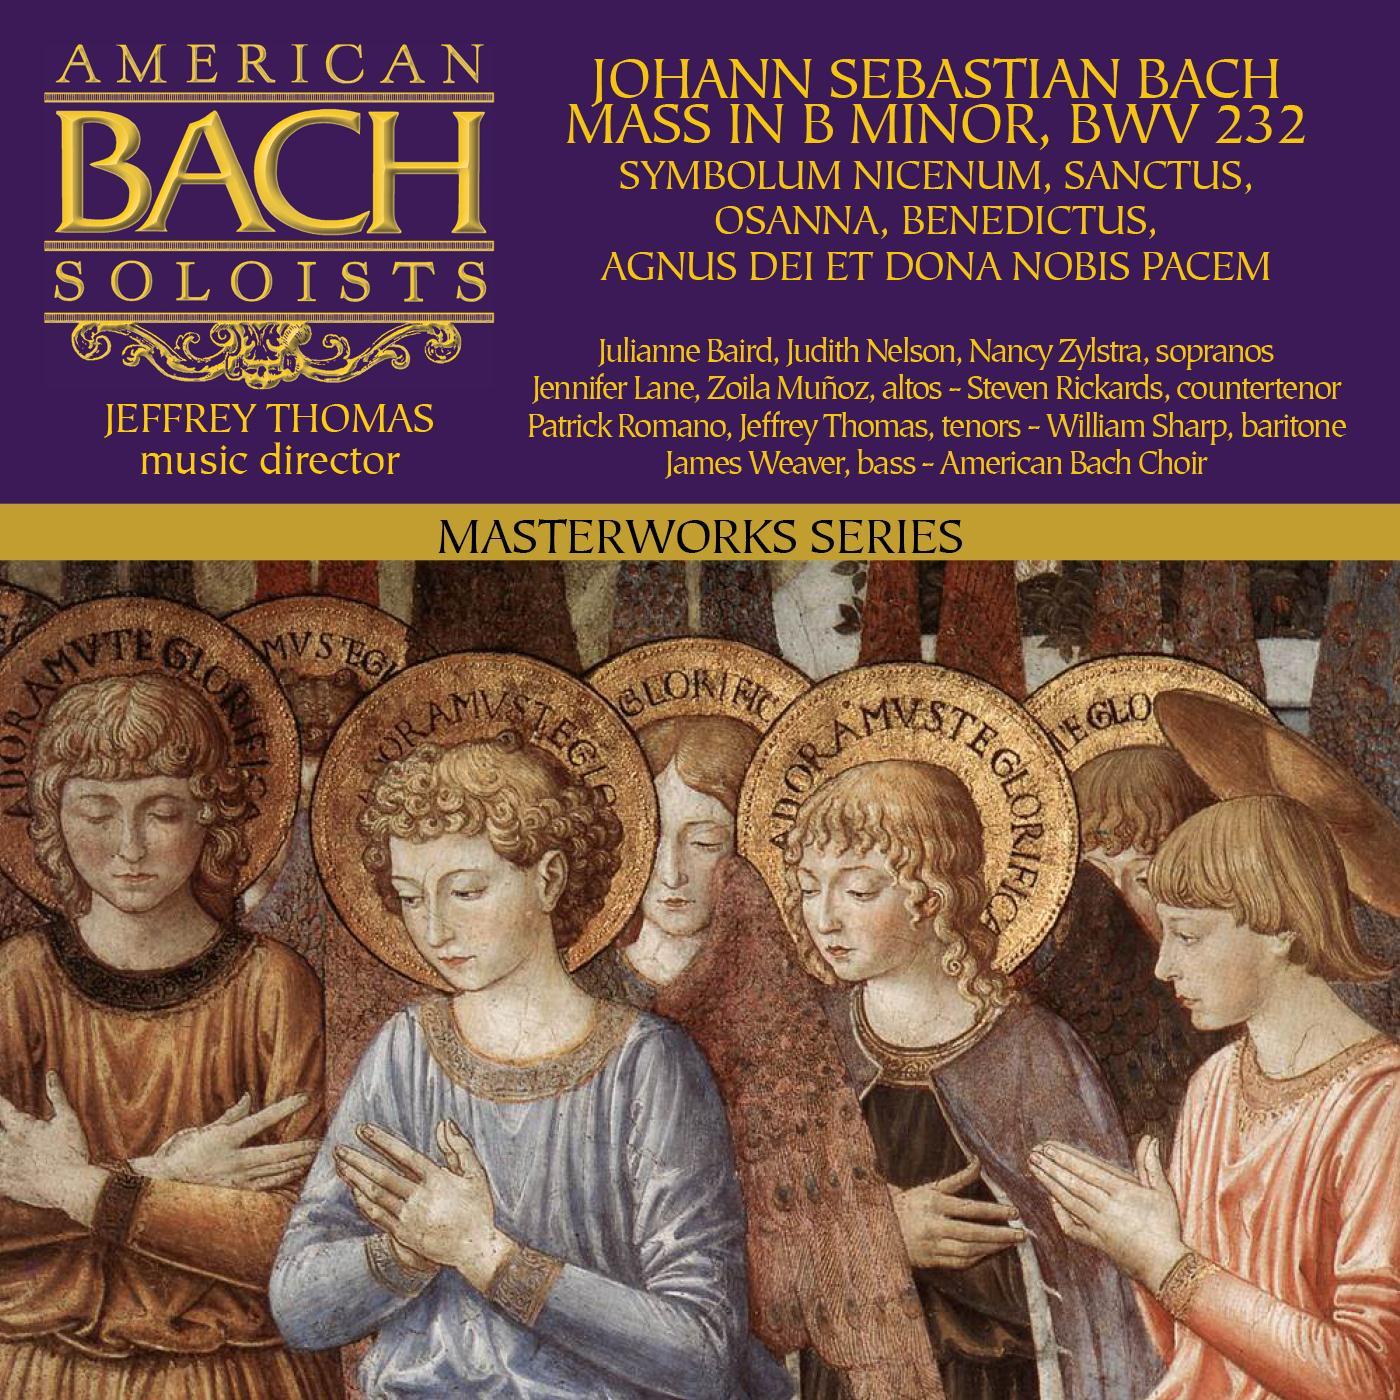 Mass in B Minor, BWV 232 Chorus: Sanctus